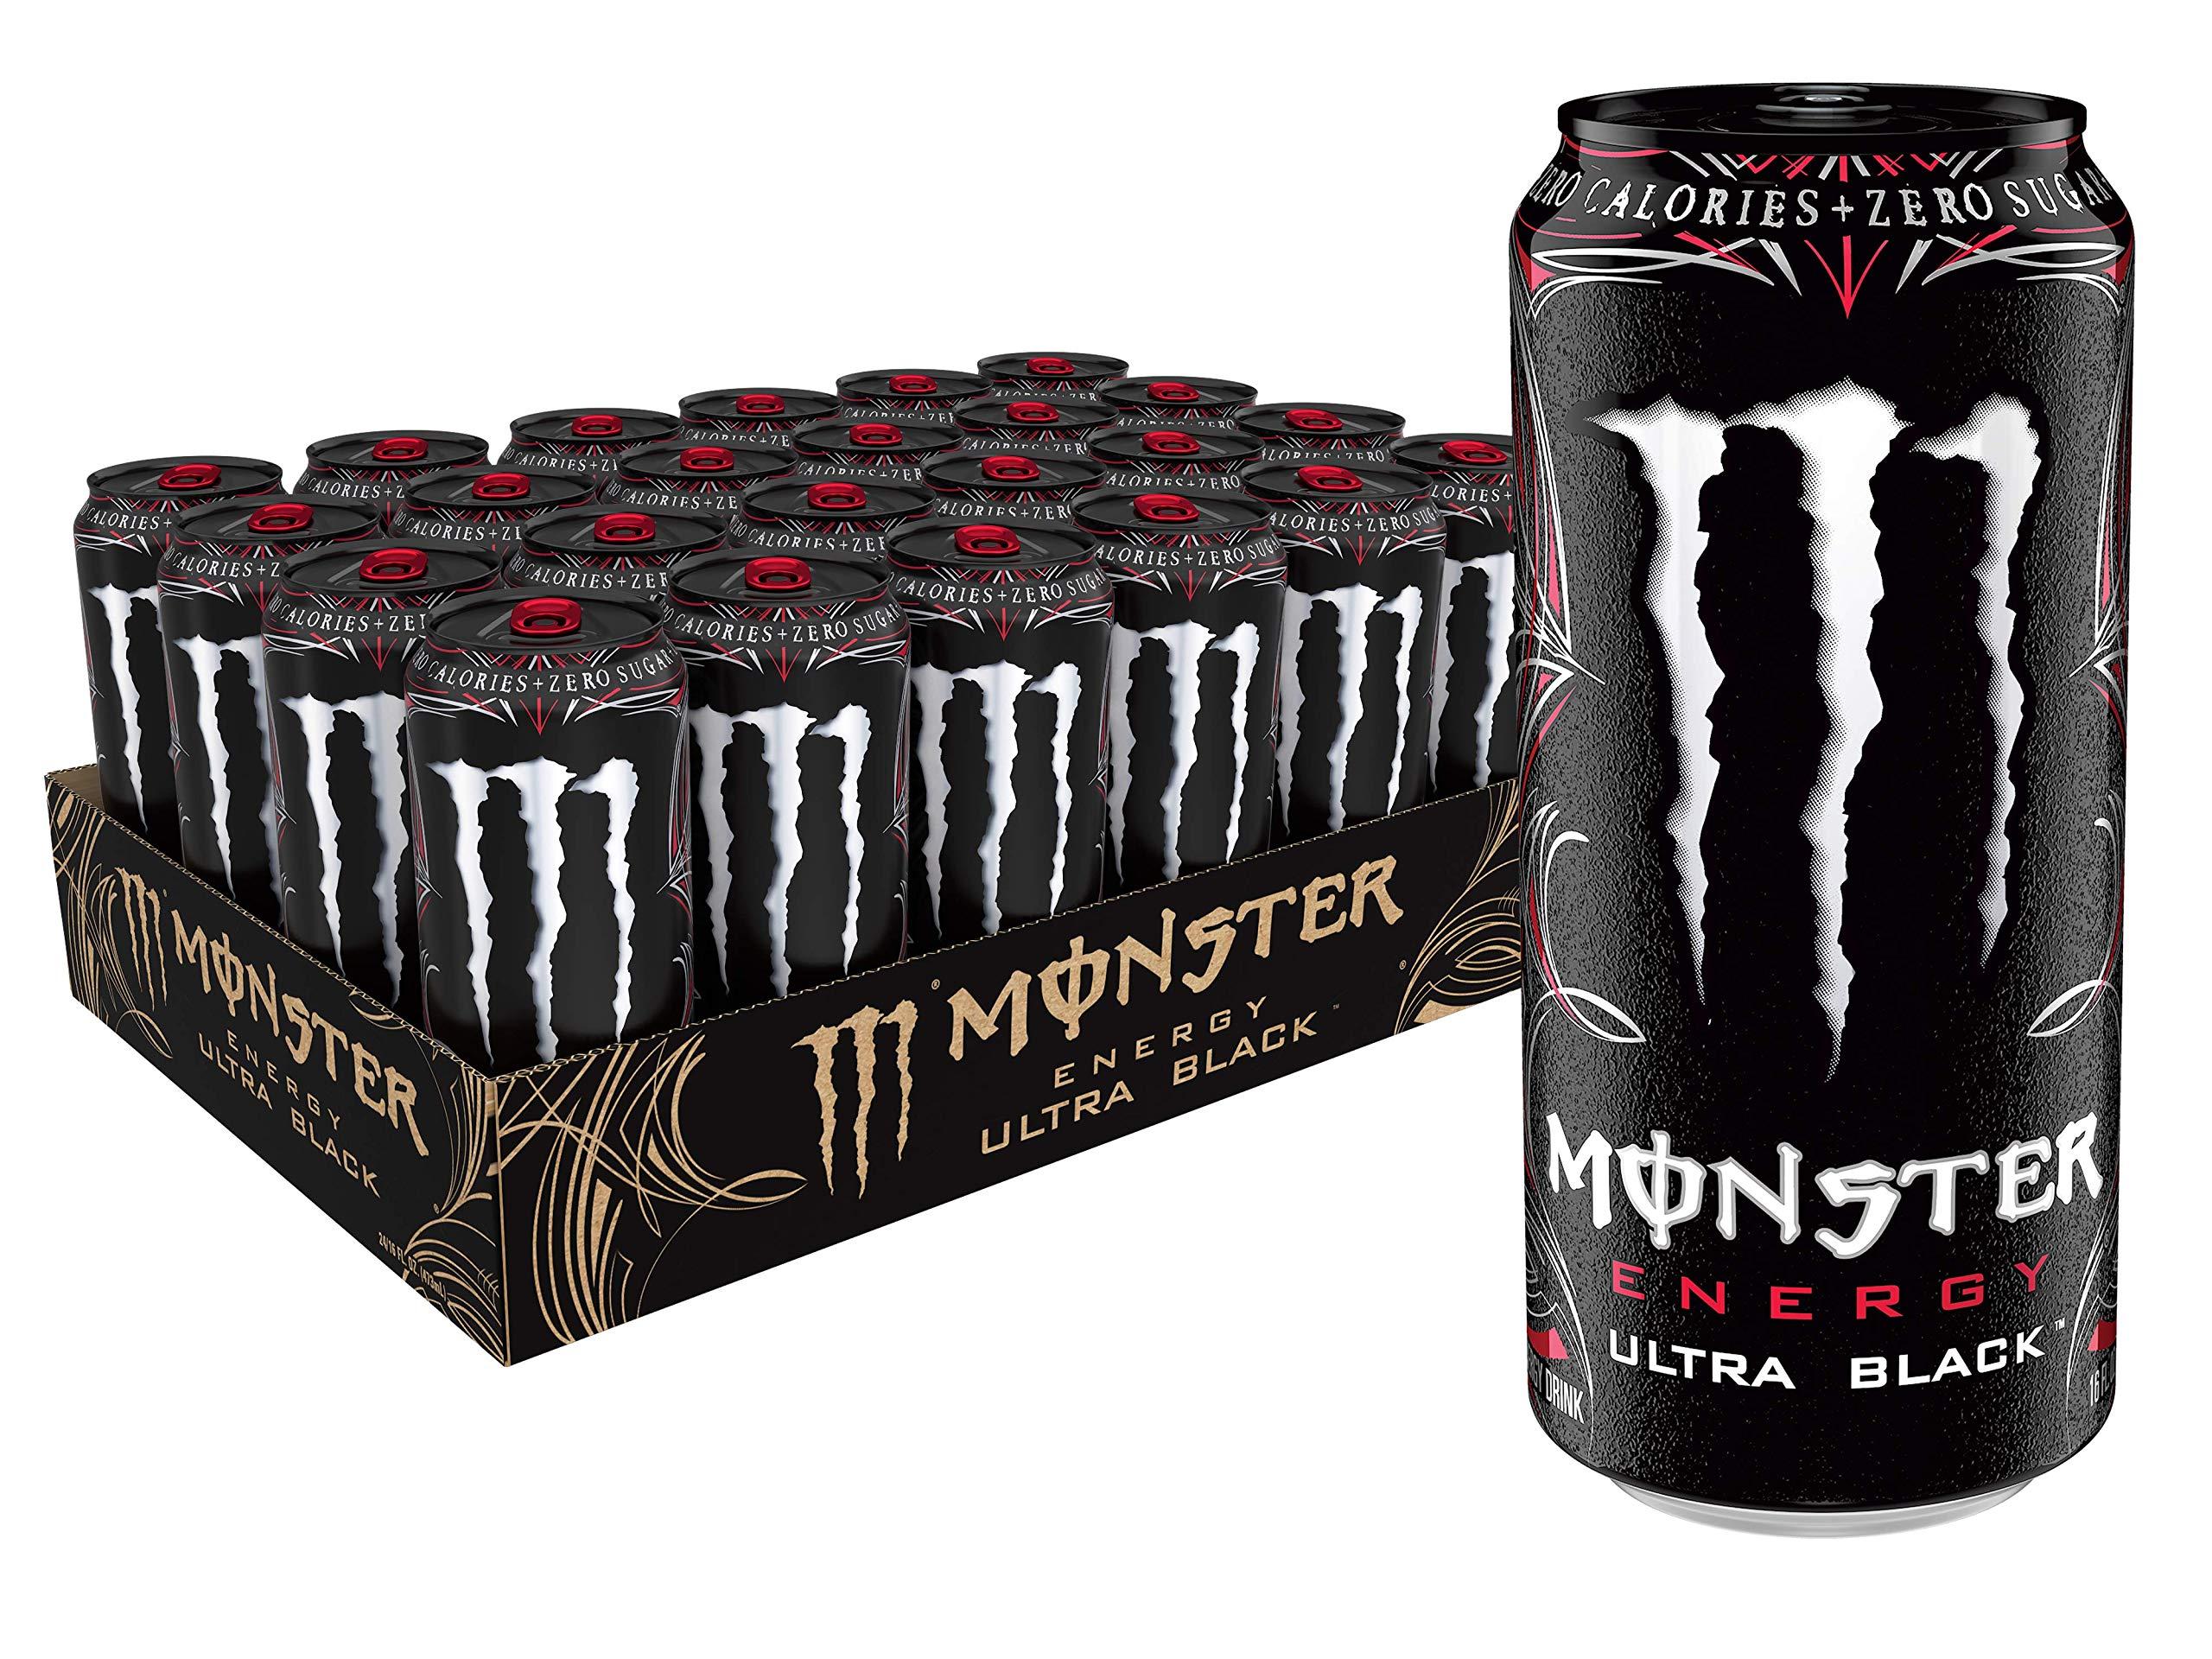 Black and White Monster Logo - Amazon.com : Monster Energy Zero Ultra, Sugar Free Energy Drink, 16